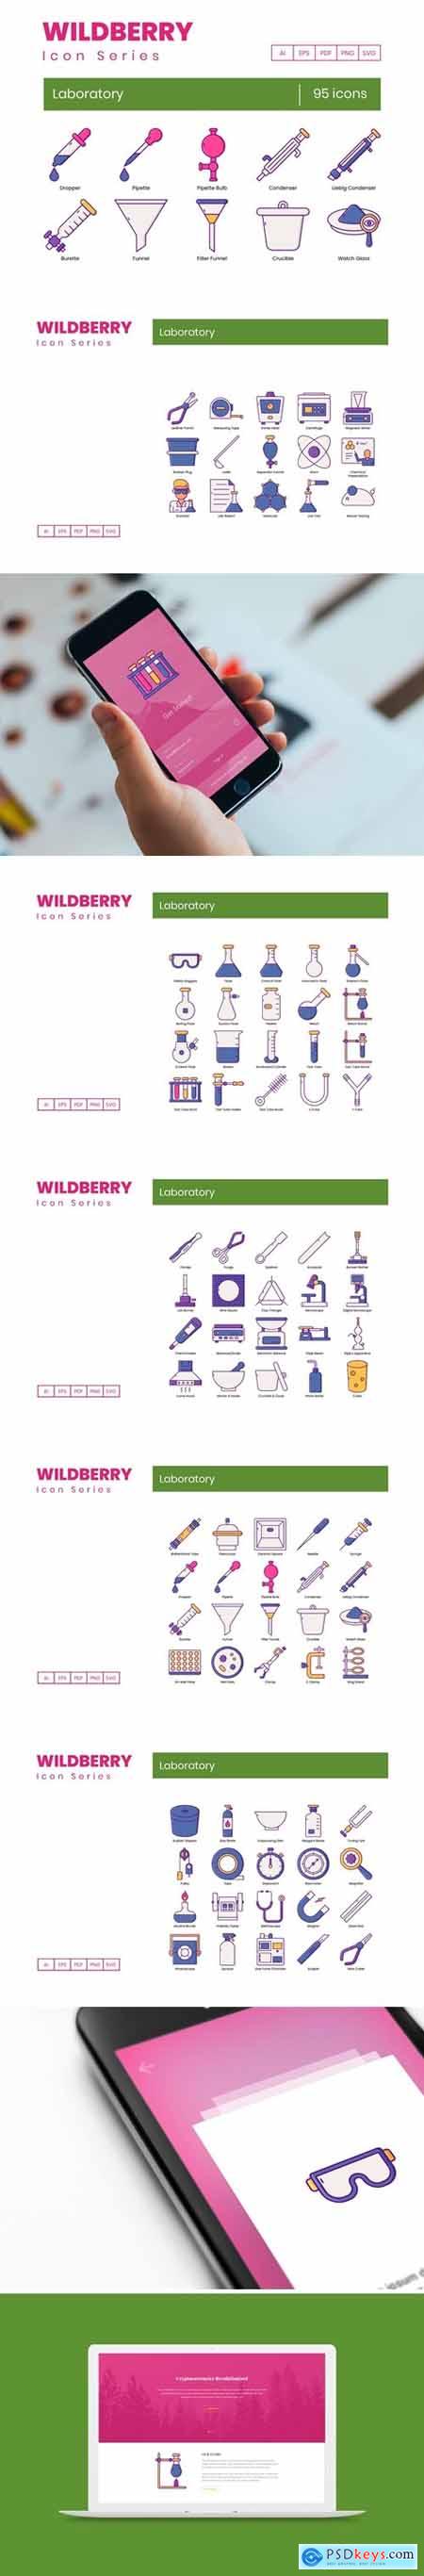 95 Laboratory Icons - Wildberry Series